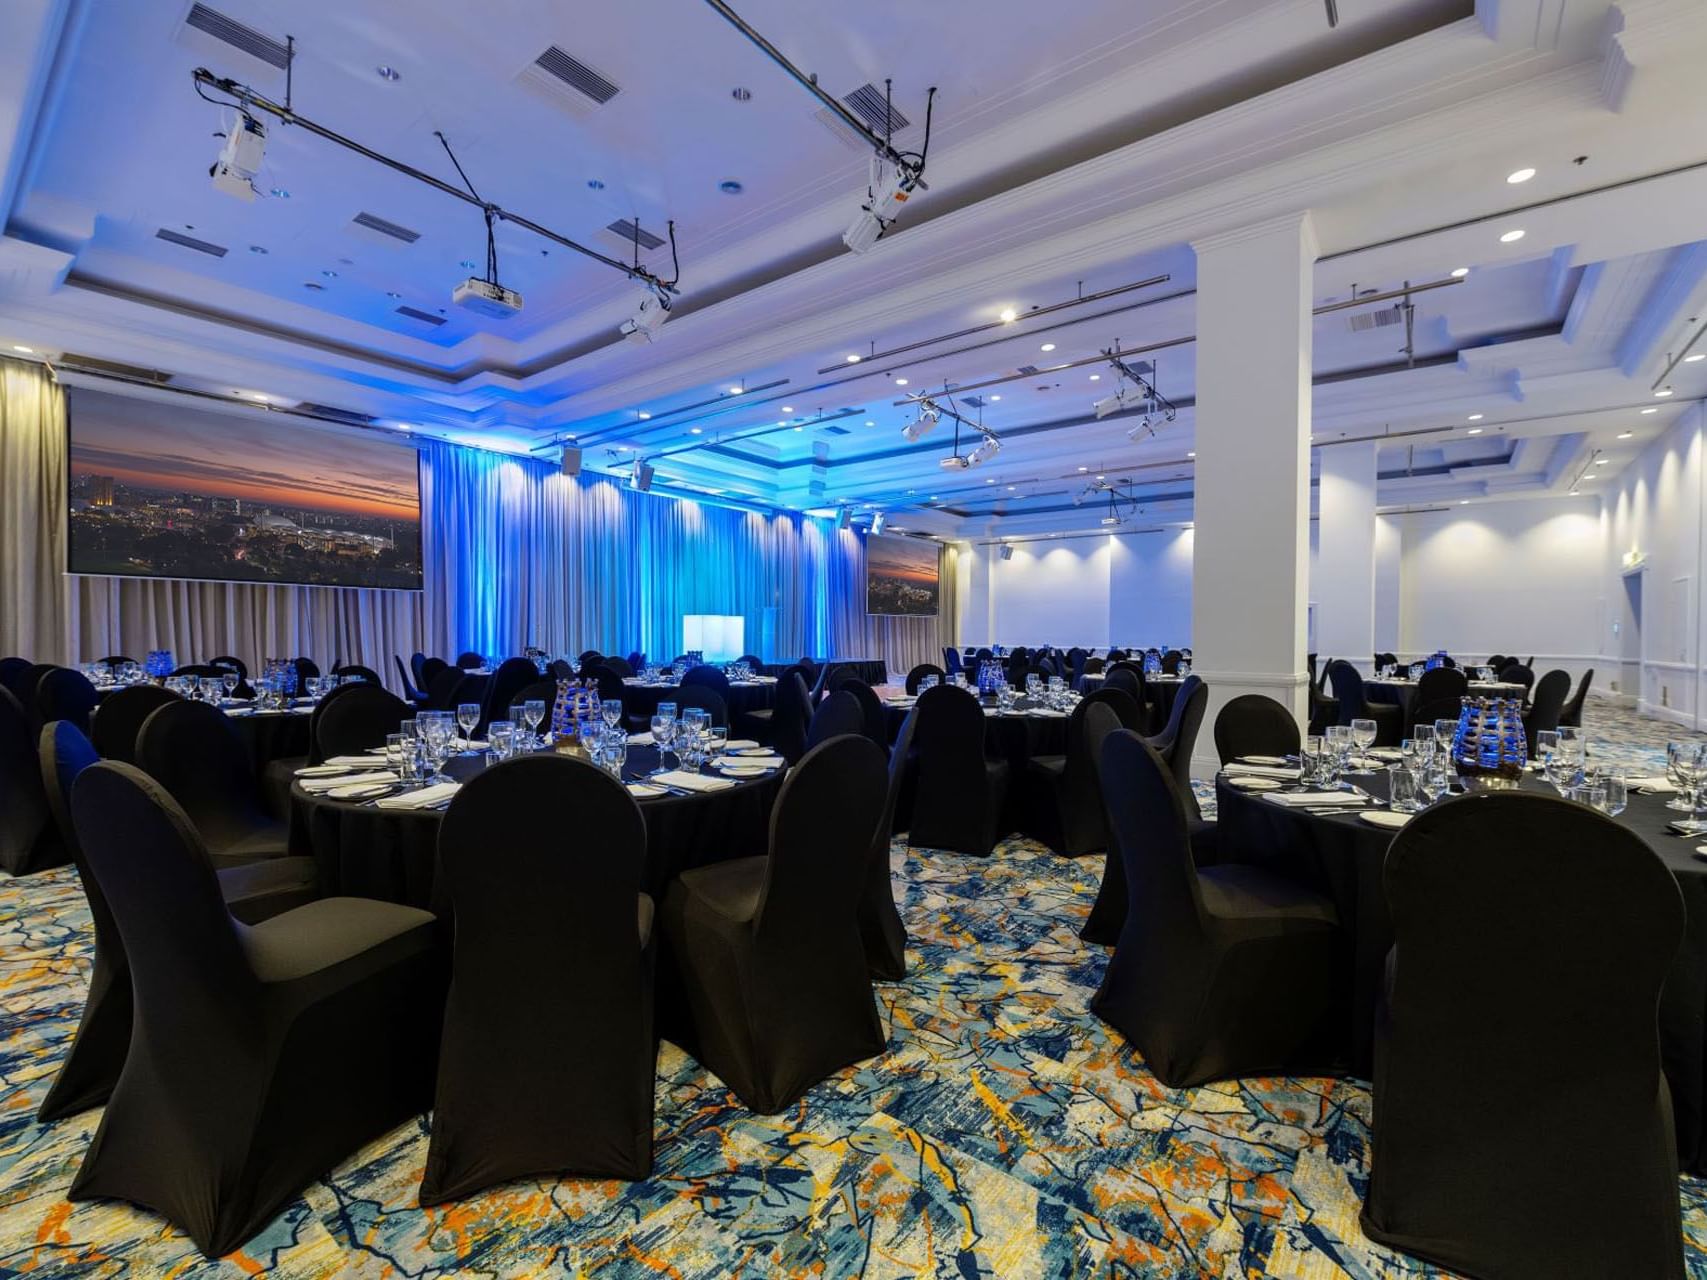 Banquet set-up in Hindley Ballroom at Hotel Grand Chancellor Adelaide